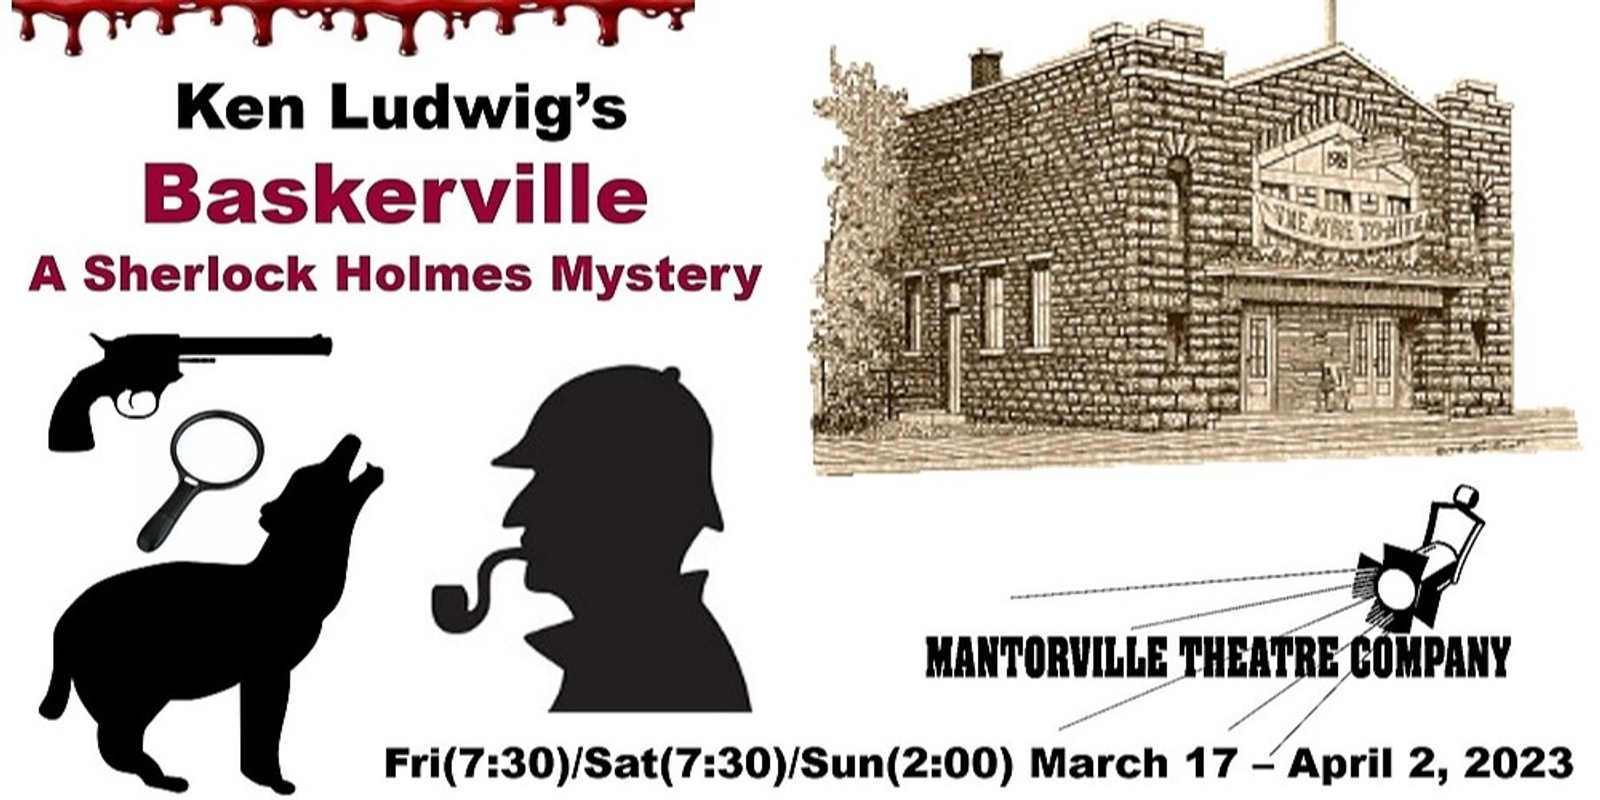 Baskerville - A Sherlock Holmes Mystery, by Ken Ludwig April 2nd 2:00 p.m.